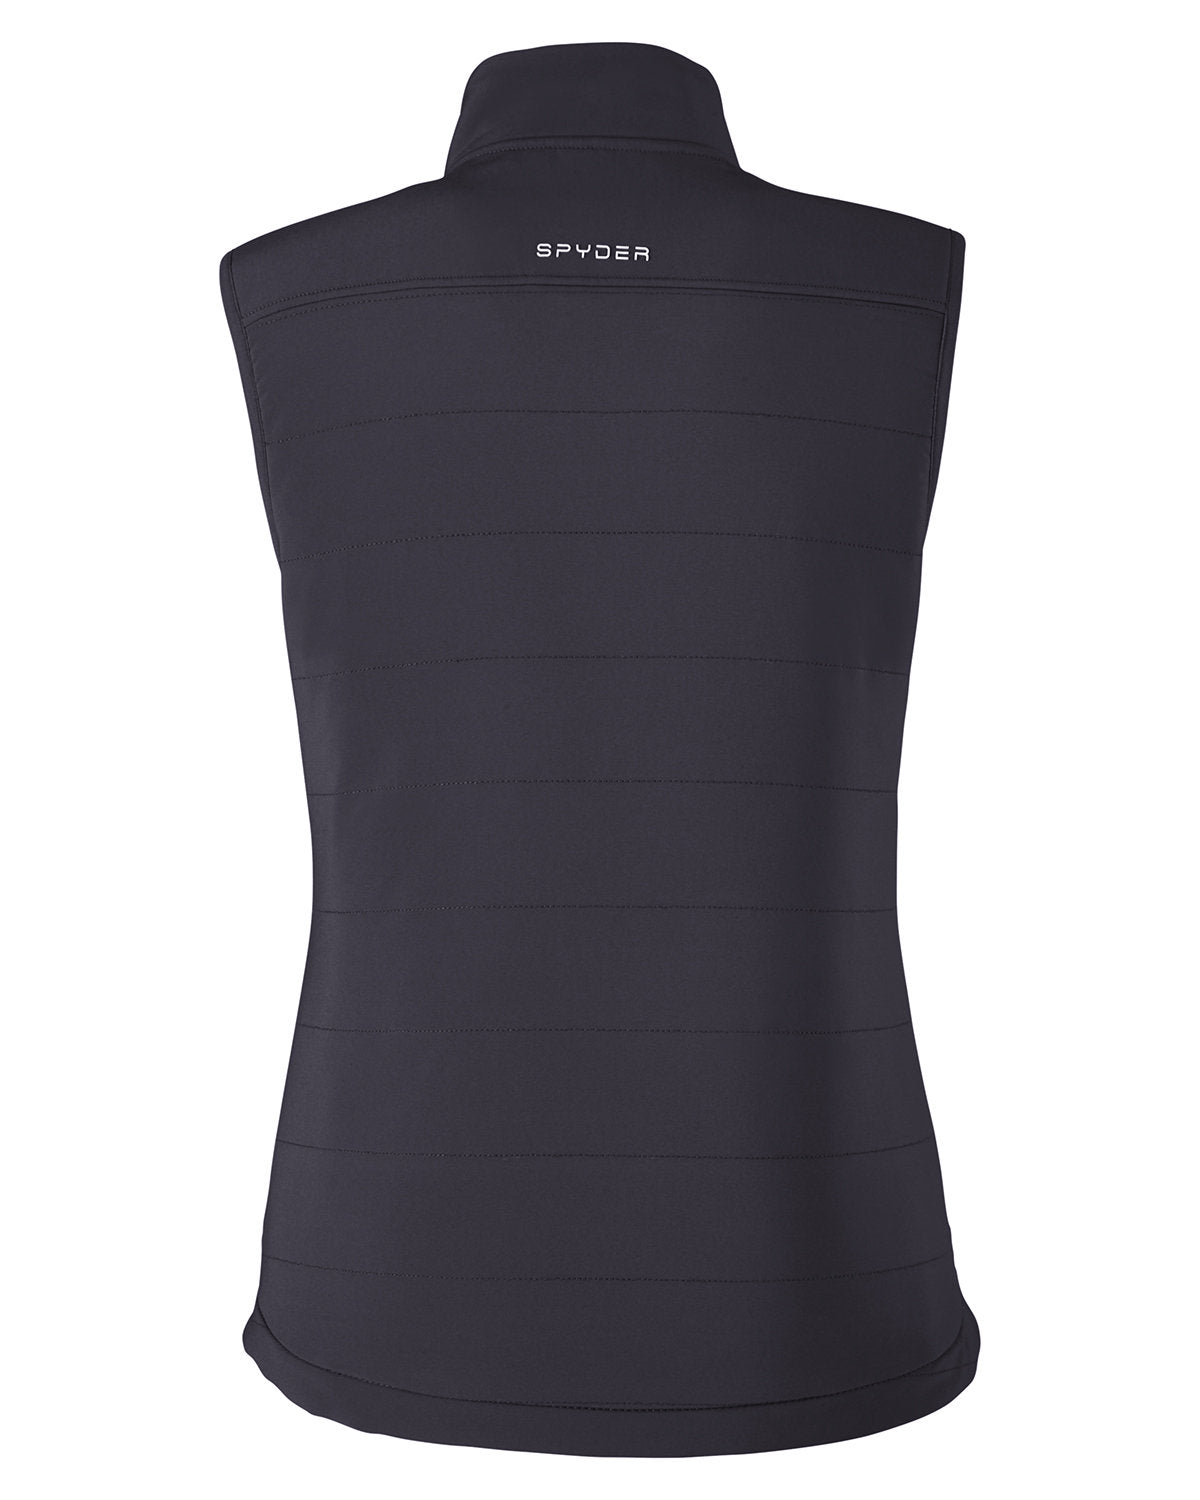 Spyder Ladies' Transit Custom Vests, Black